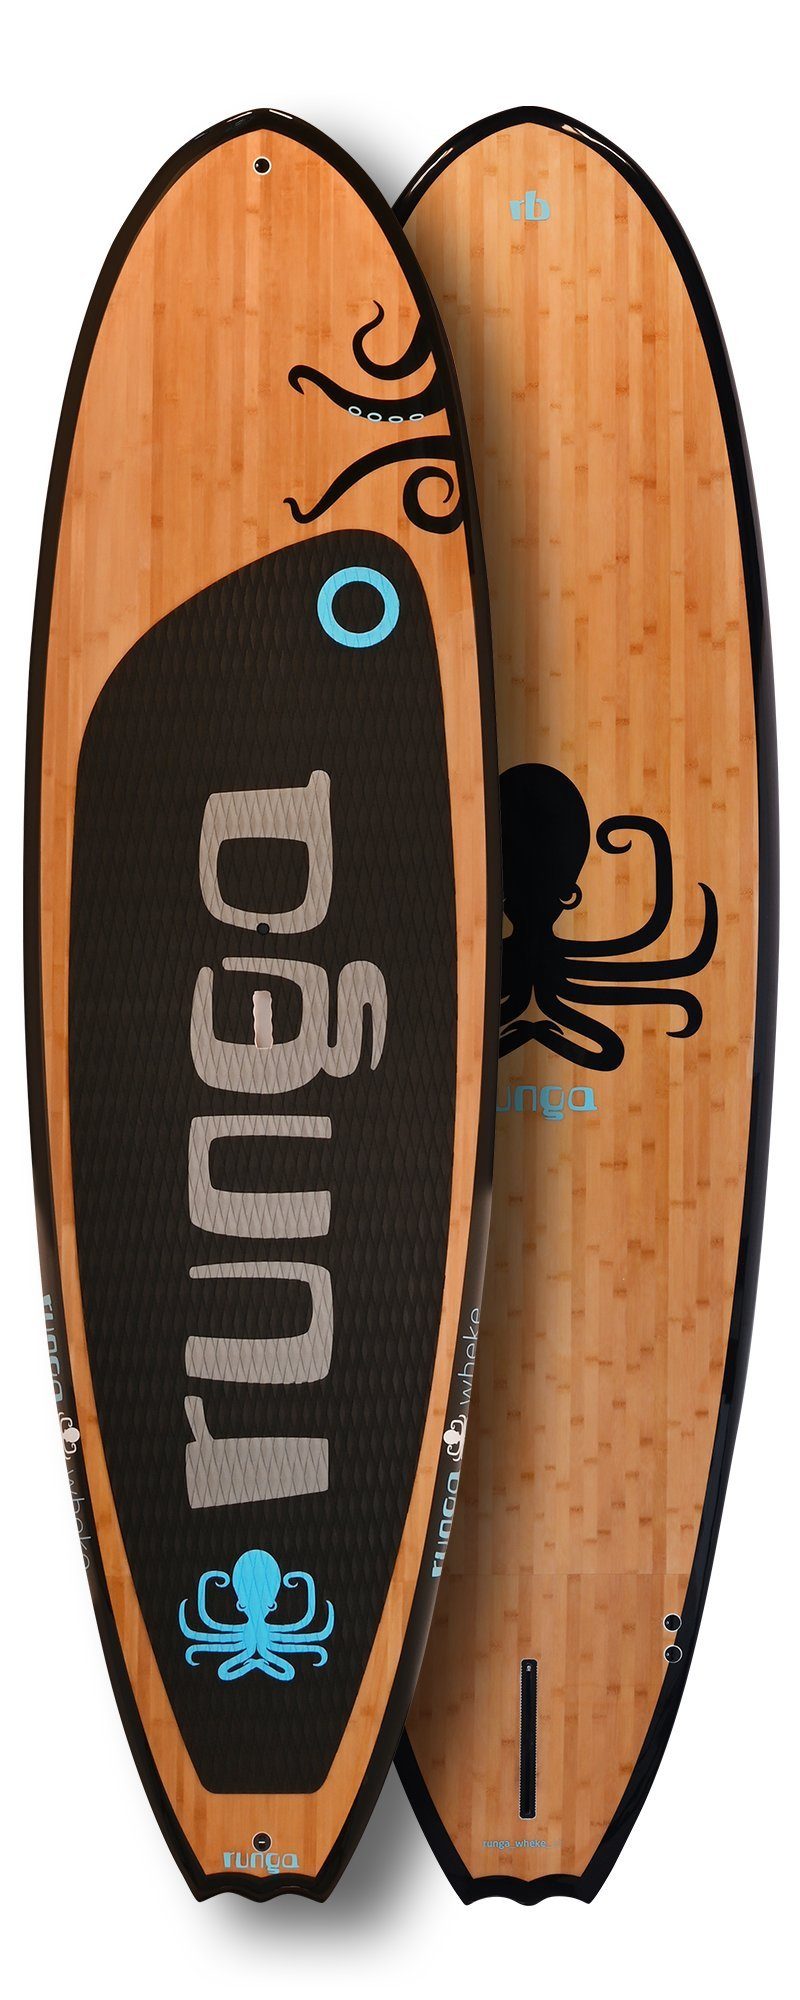 Supergünstiger Preis, große Veröffentlichung Runga-Boards SUP-Board Runga WHEKE dark (9.5, coiled Finnen-Set) BAMBOO Stand Board SUP, Allrounder, Inkl. Paddling 3-tlg. Up Hard leash &